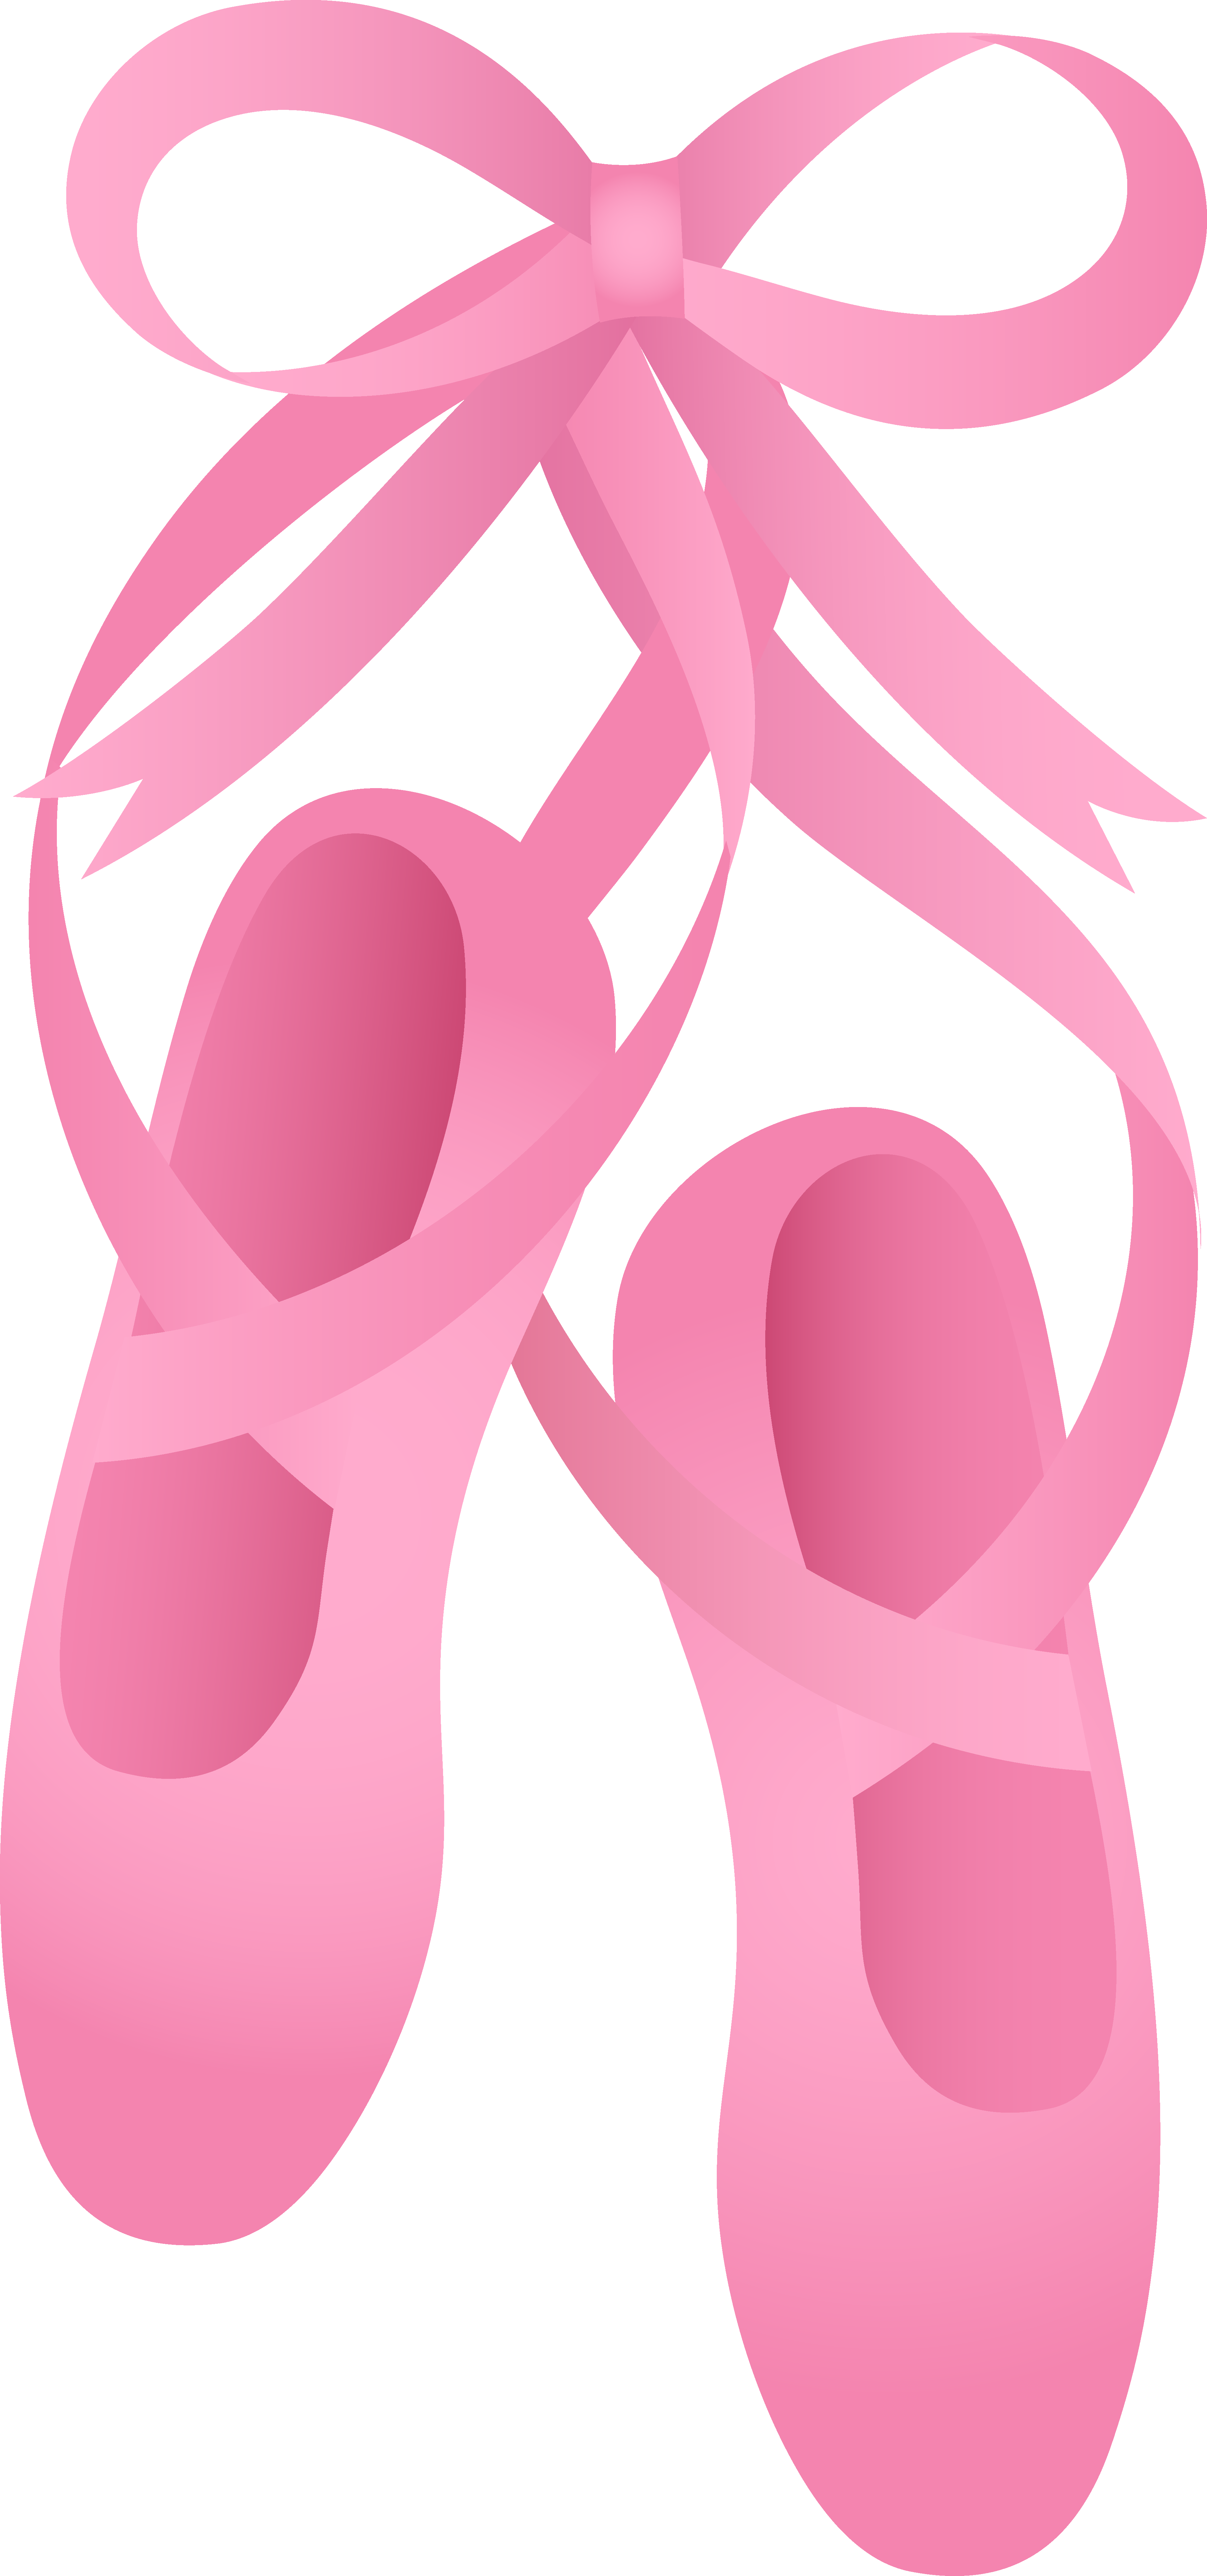 Cartoon Ballet Shoes - Cliparts.co